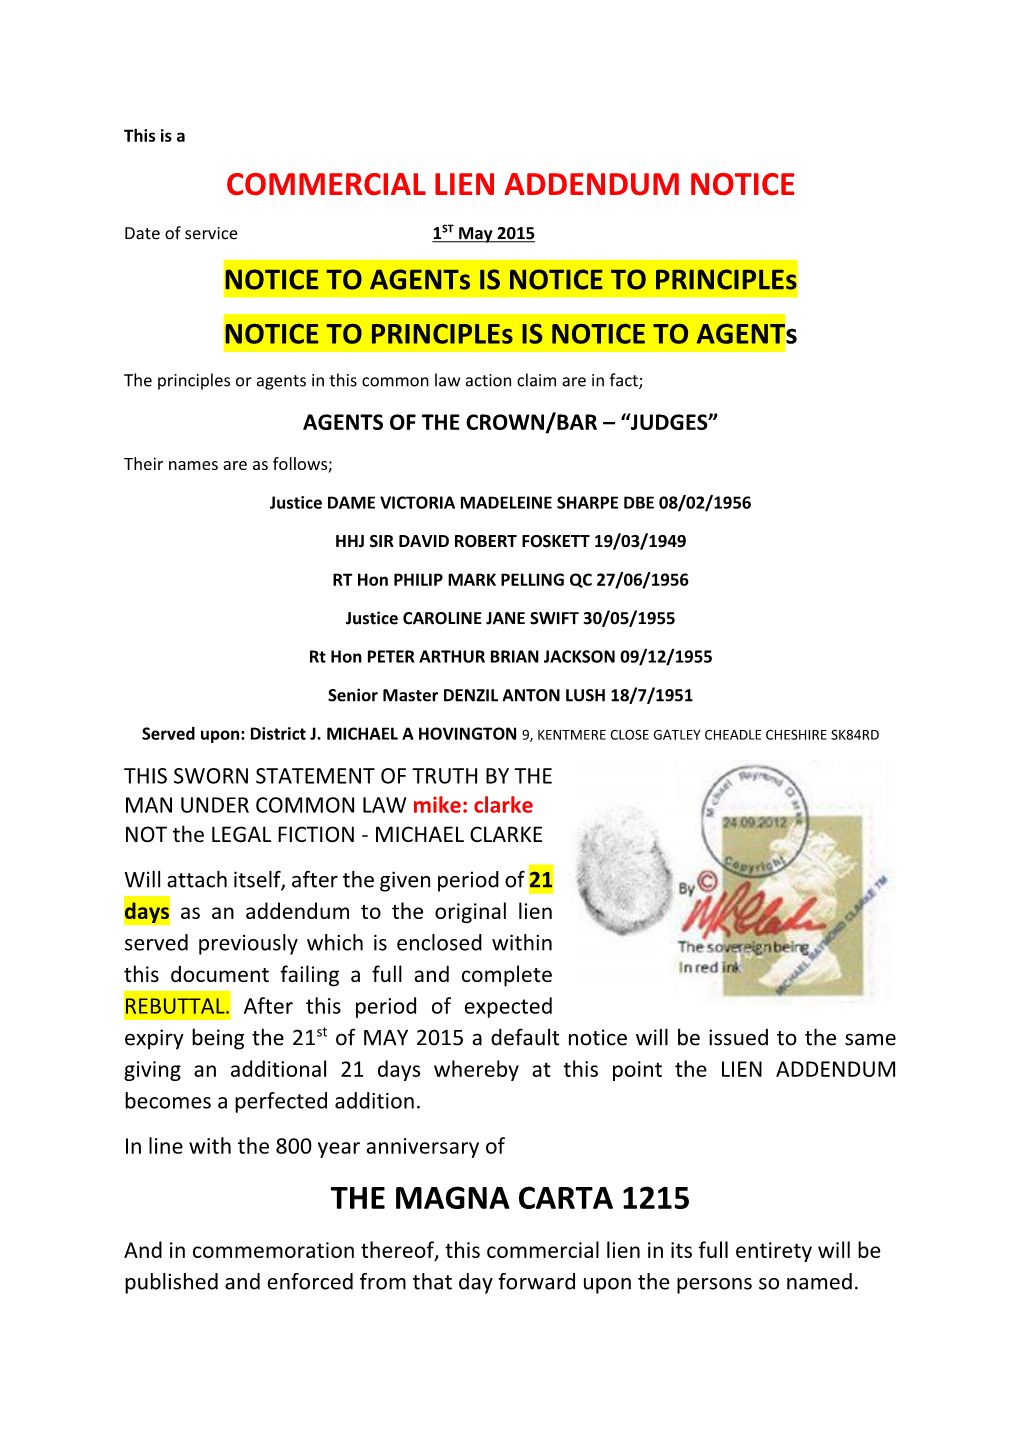 Commercial Lien Addendum Notice the Magna Carta 1215